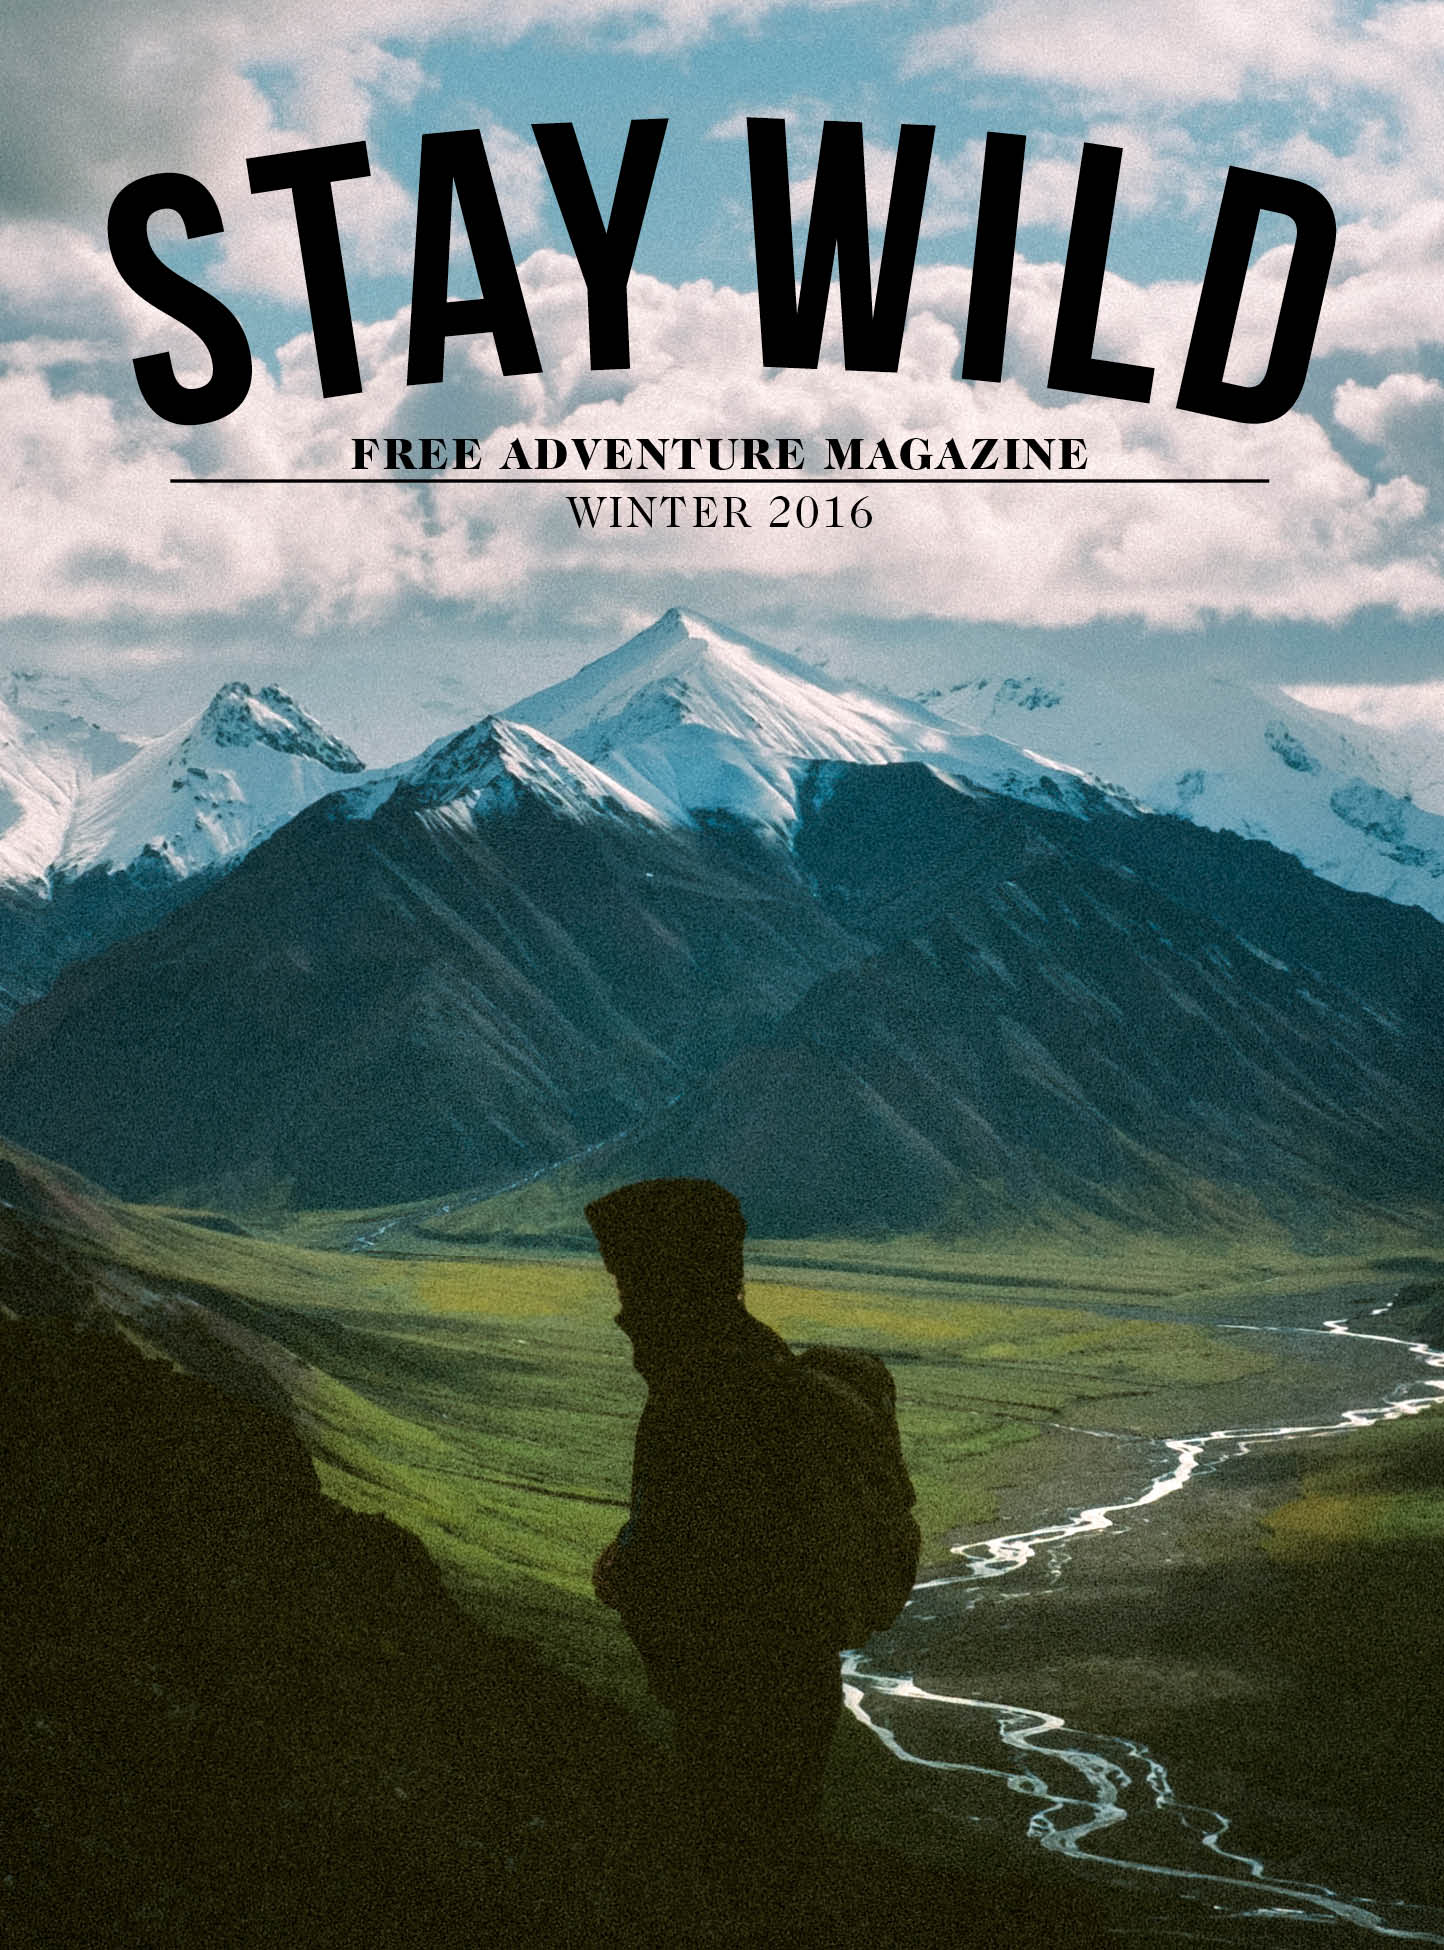 Adventures magazine. Stay Wild. Stay-Wild шапка. Stay Wild перевод.